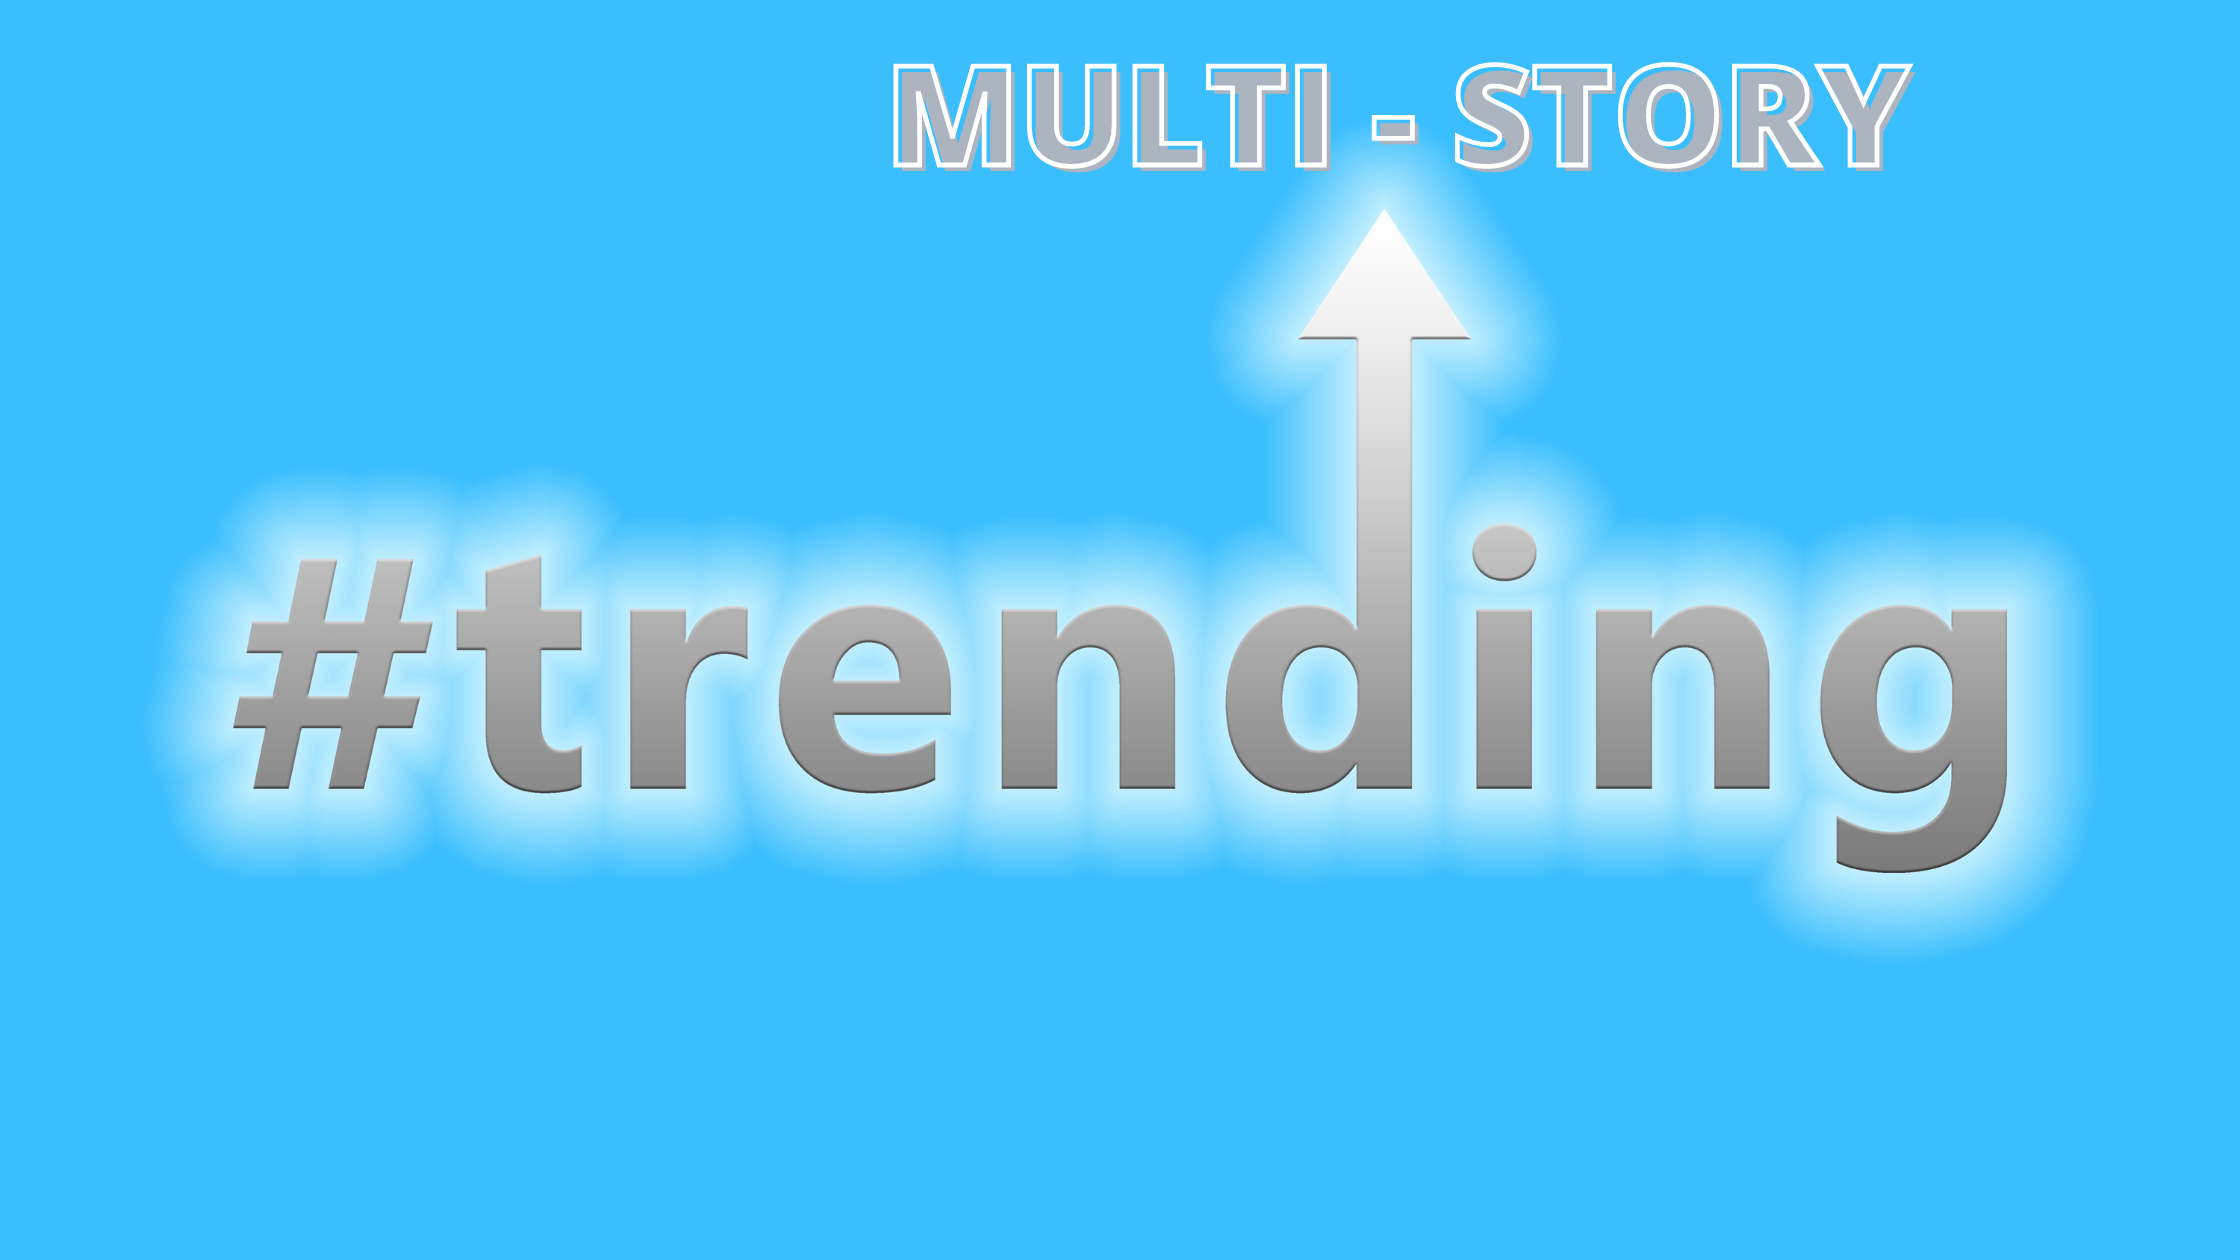 Multi-Story is trending